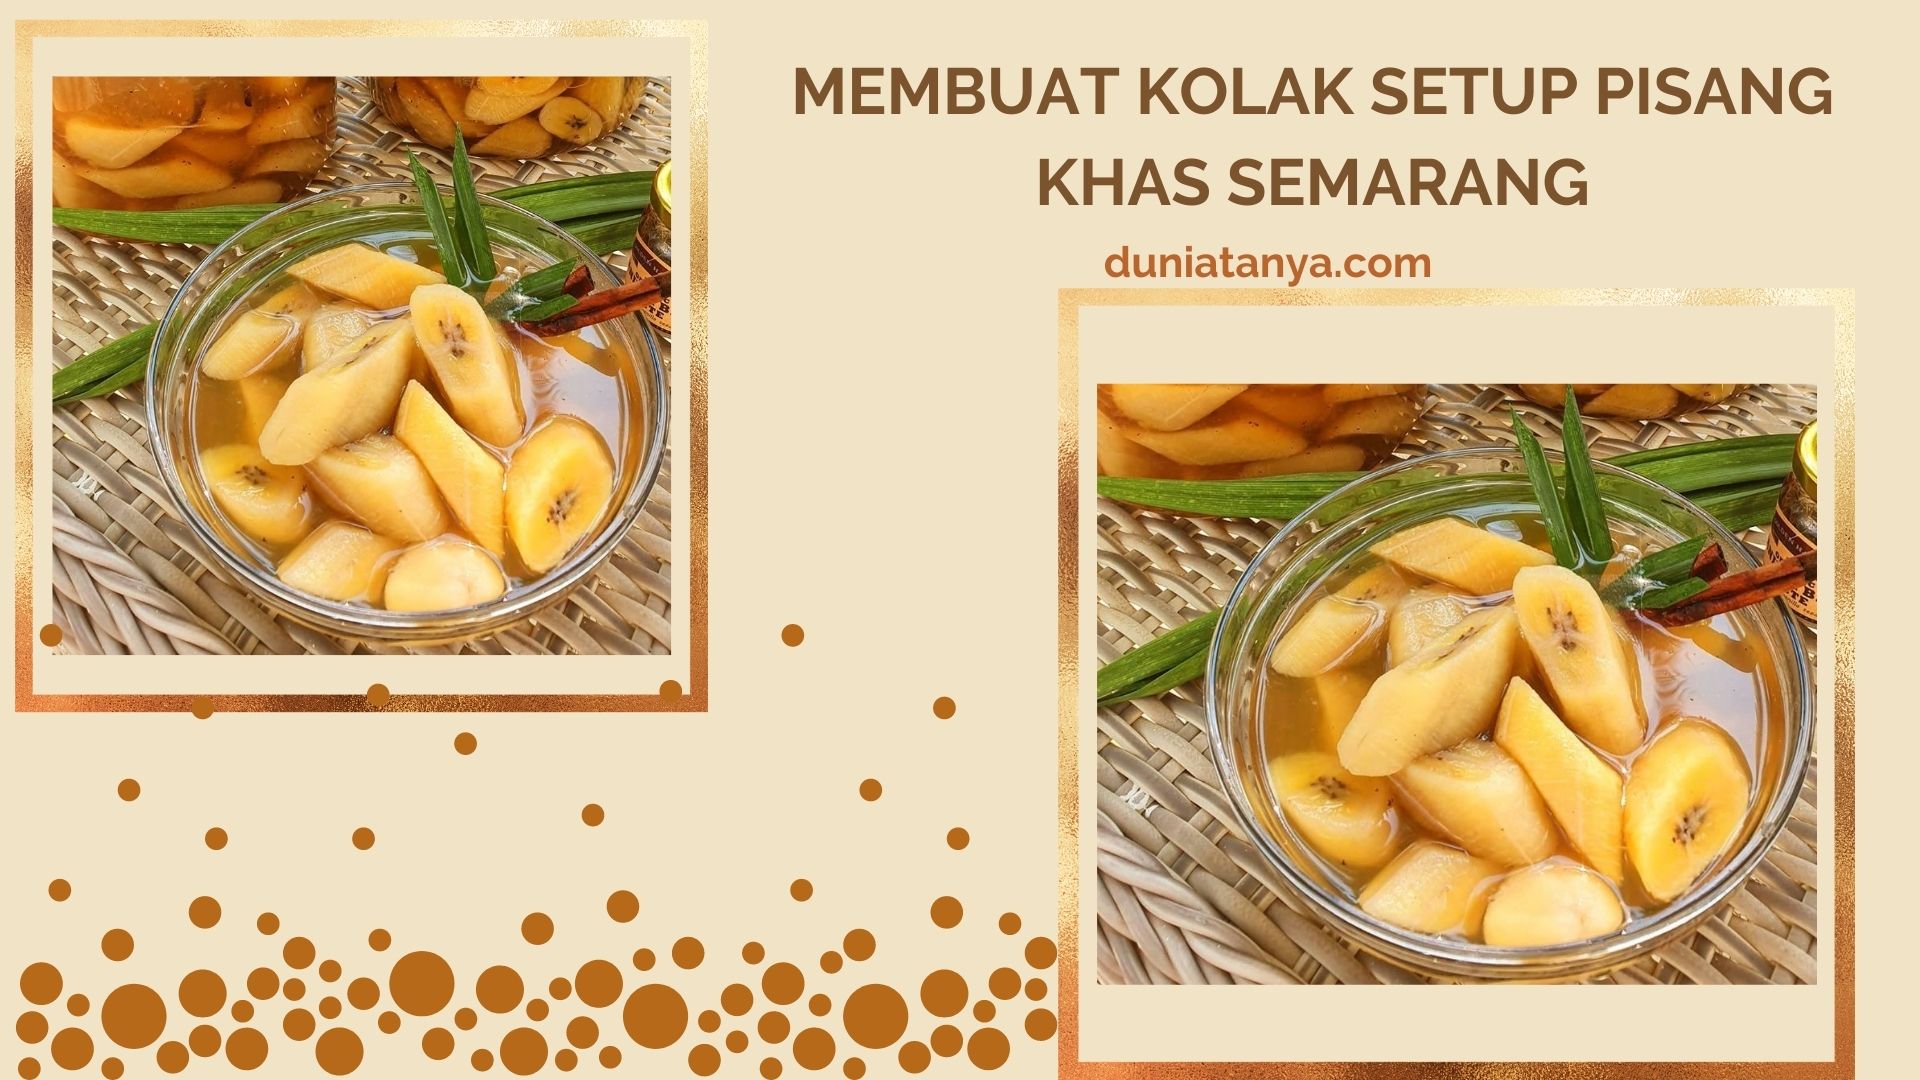 You are currently viewing Membuat Kolak Setup Pisang Khas Semarang